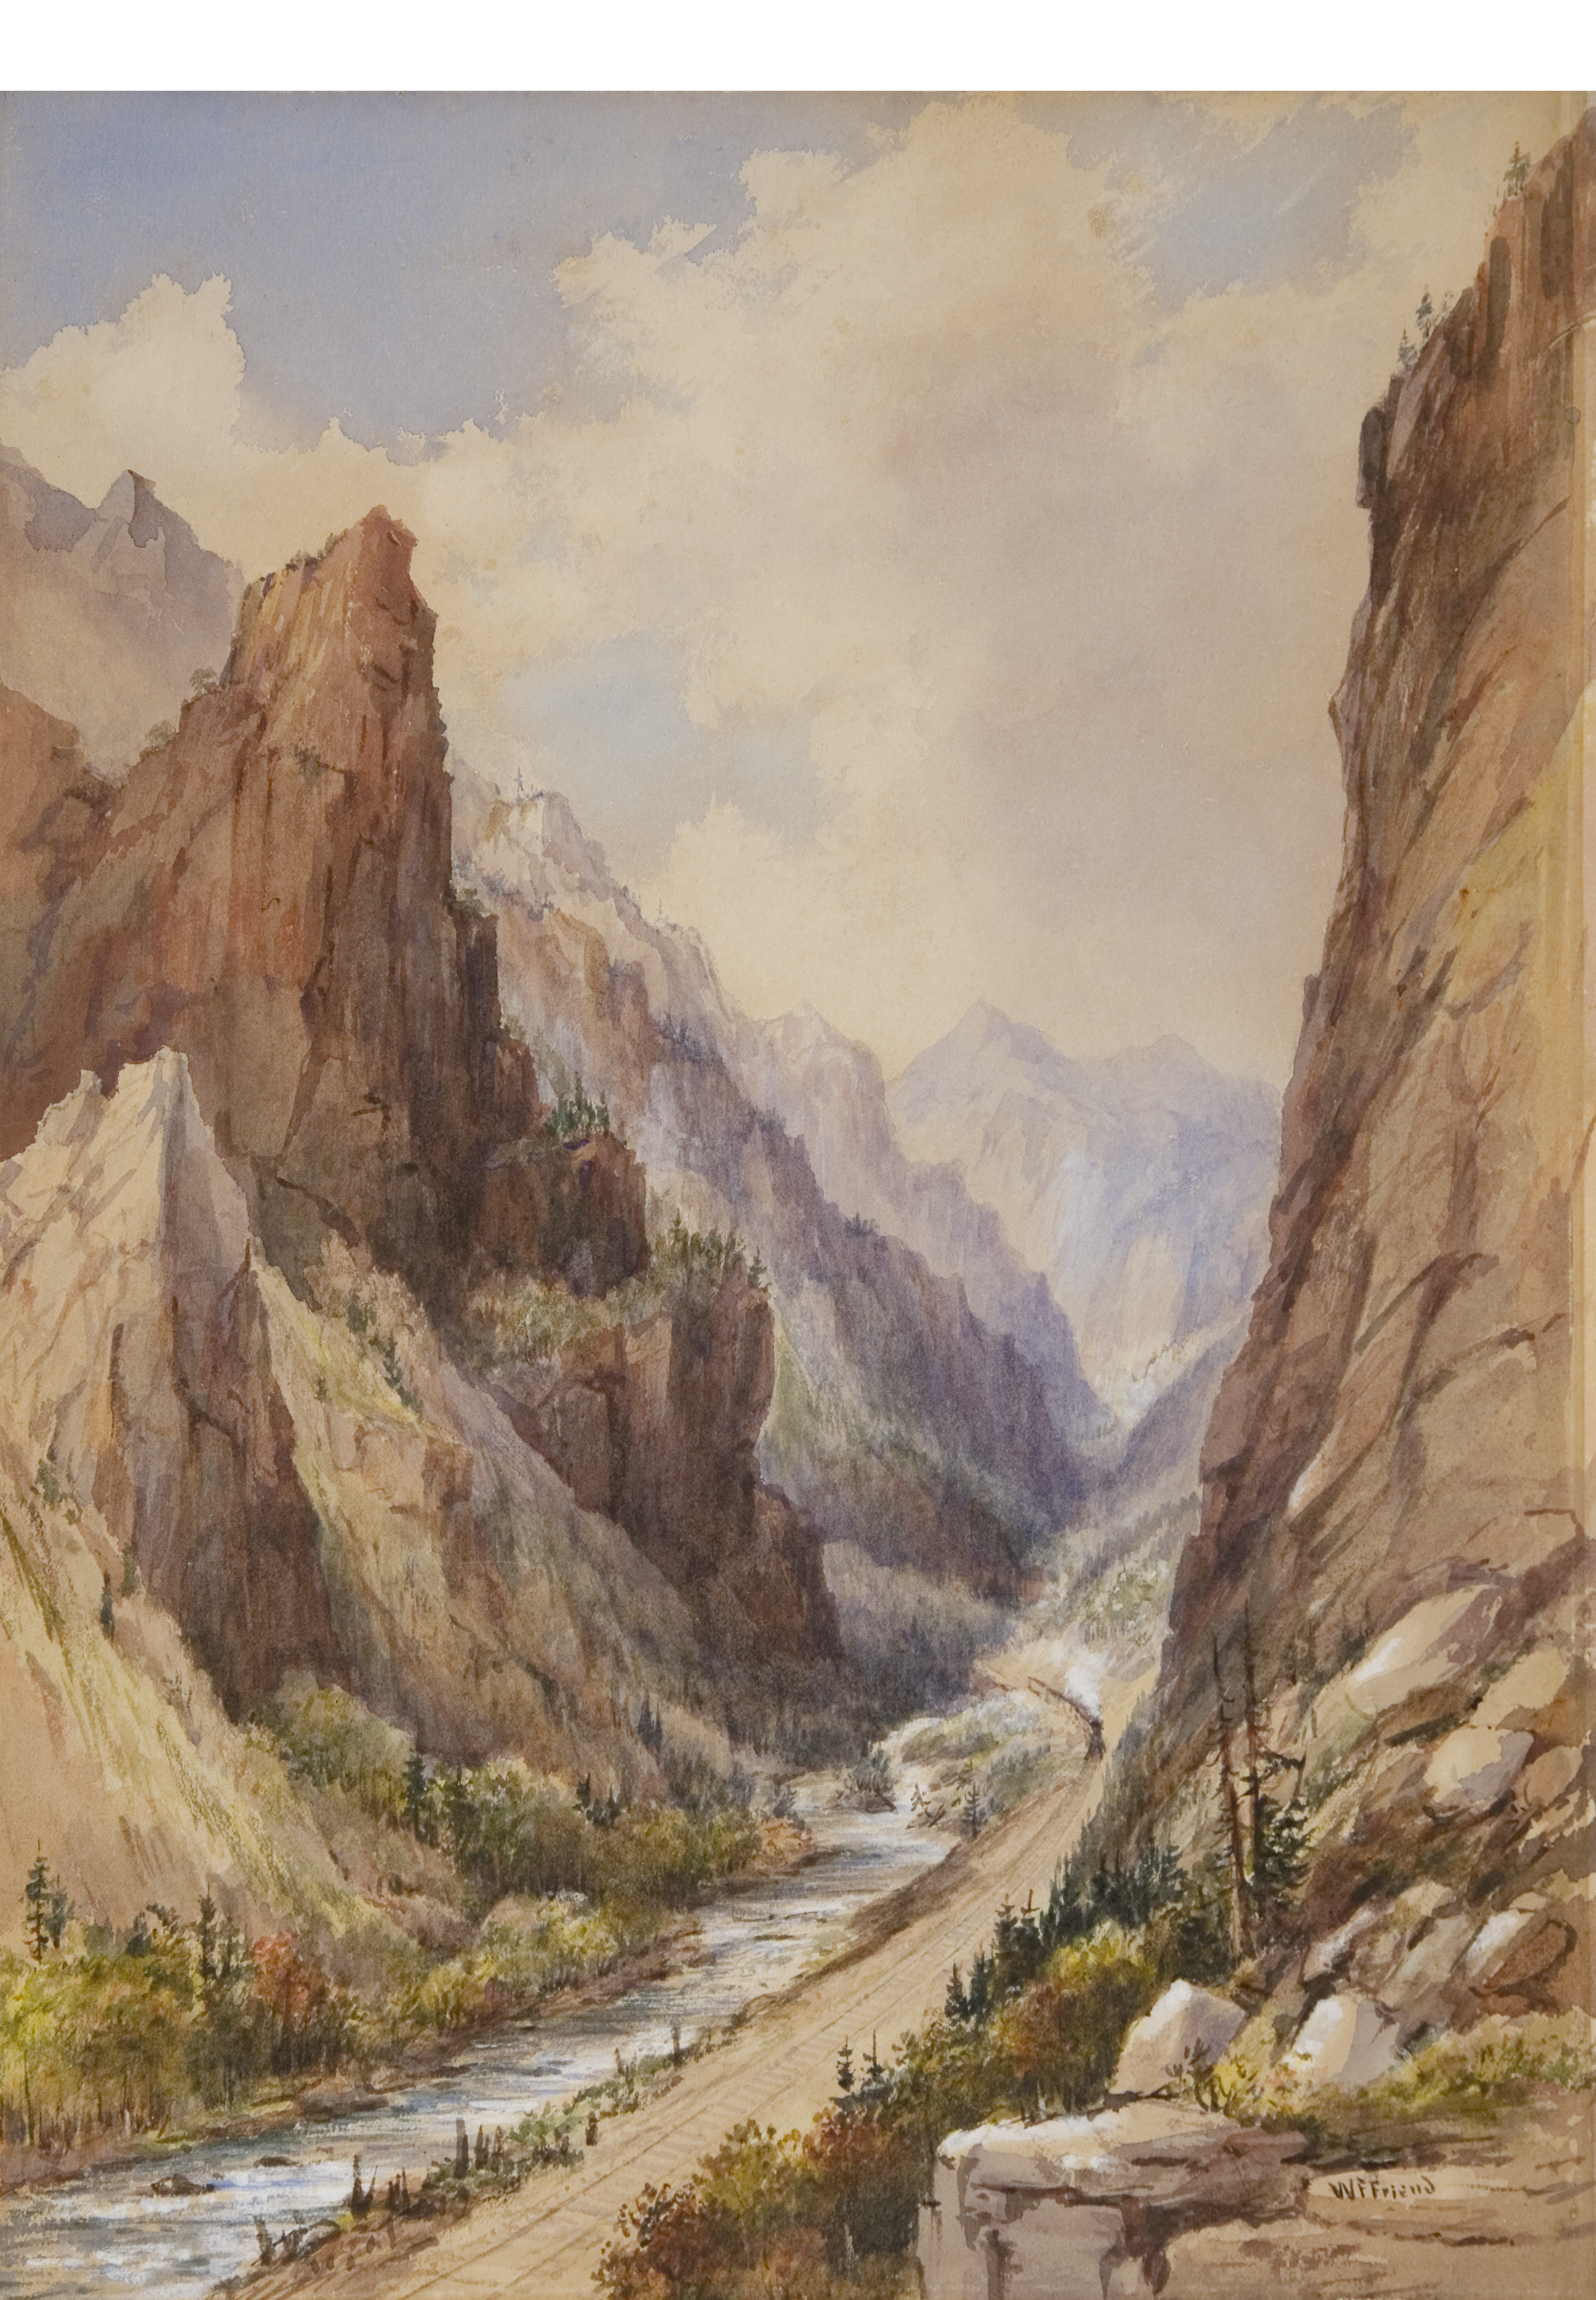 William F. Friend's American Fork Canyon, Utah